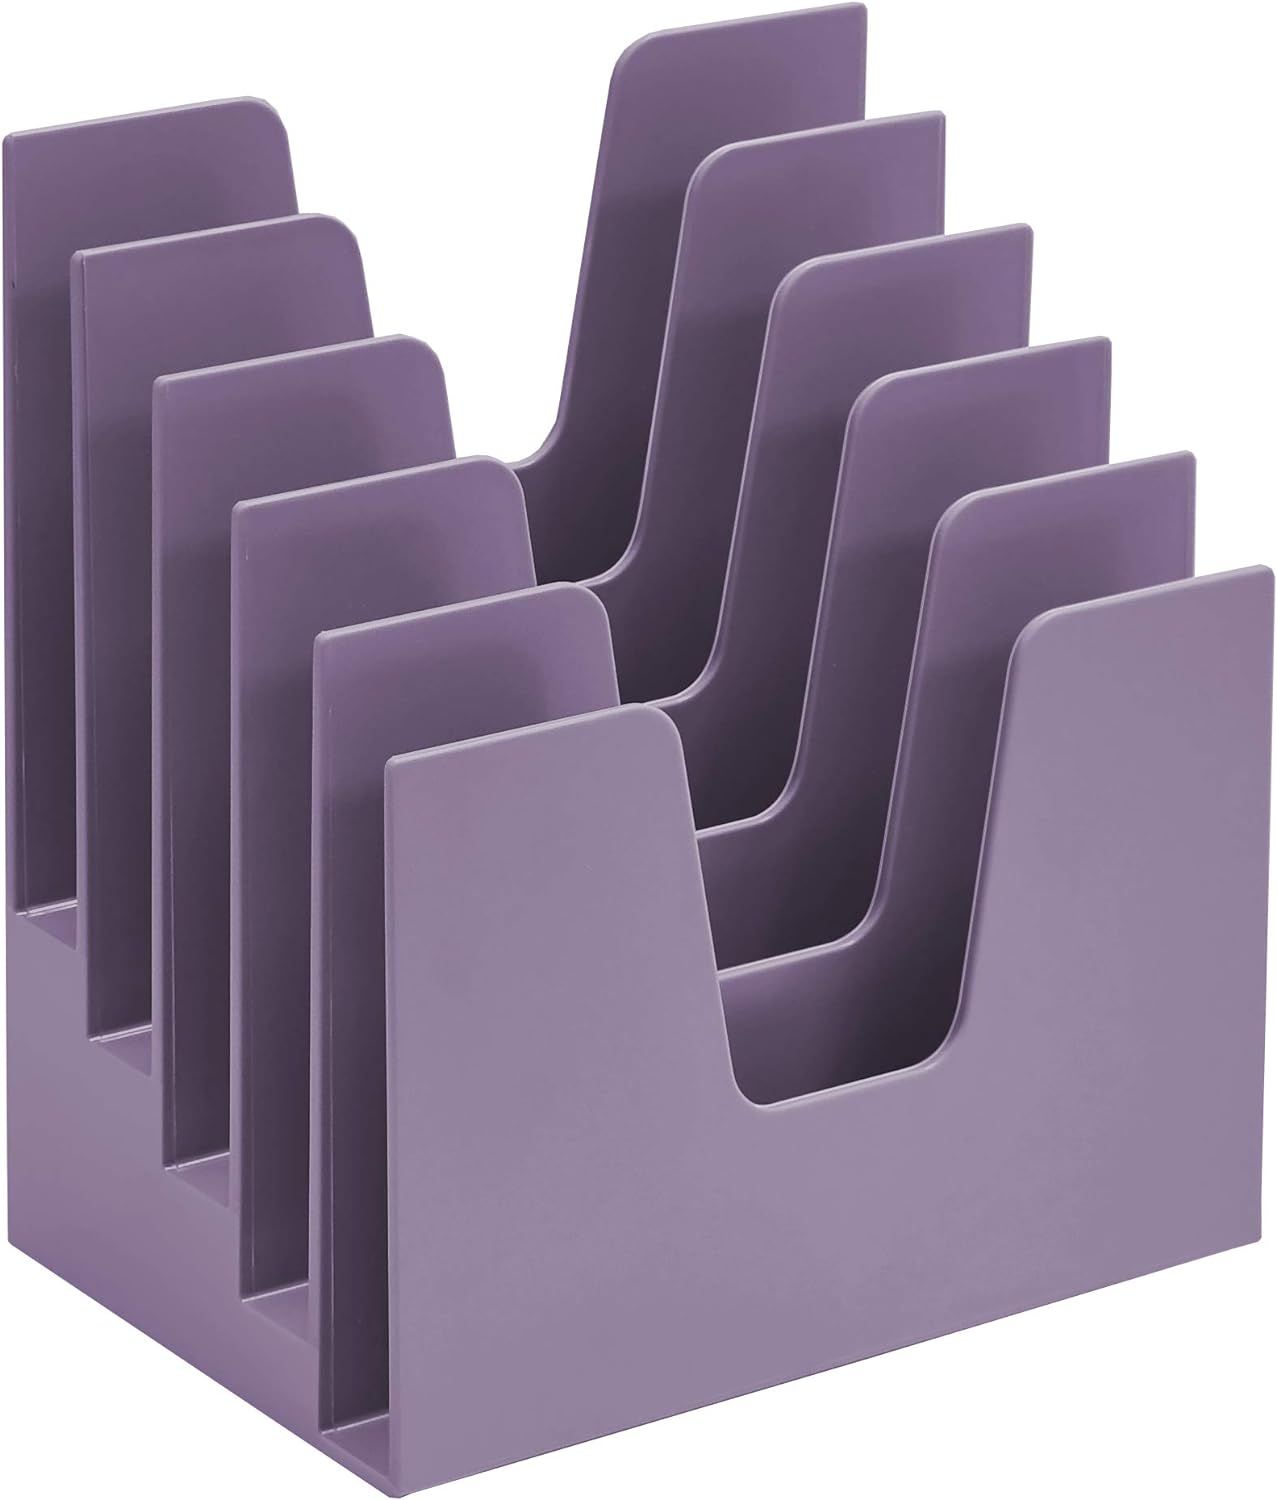 Acrimet Incline Desk File Sorter Step 5 Sections Heavy Duty (Solid Purple Color) | Amazon (US)